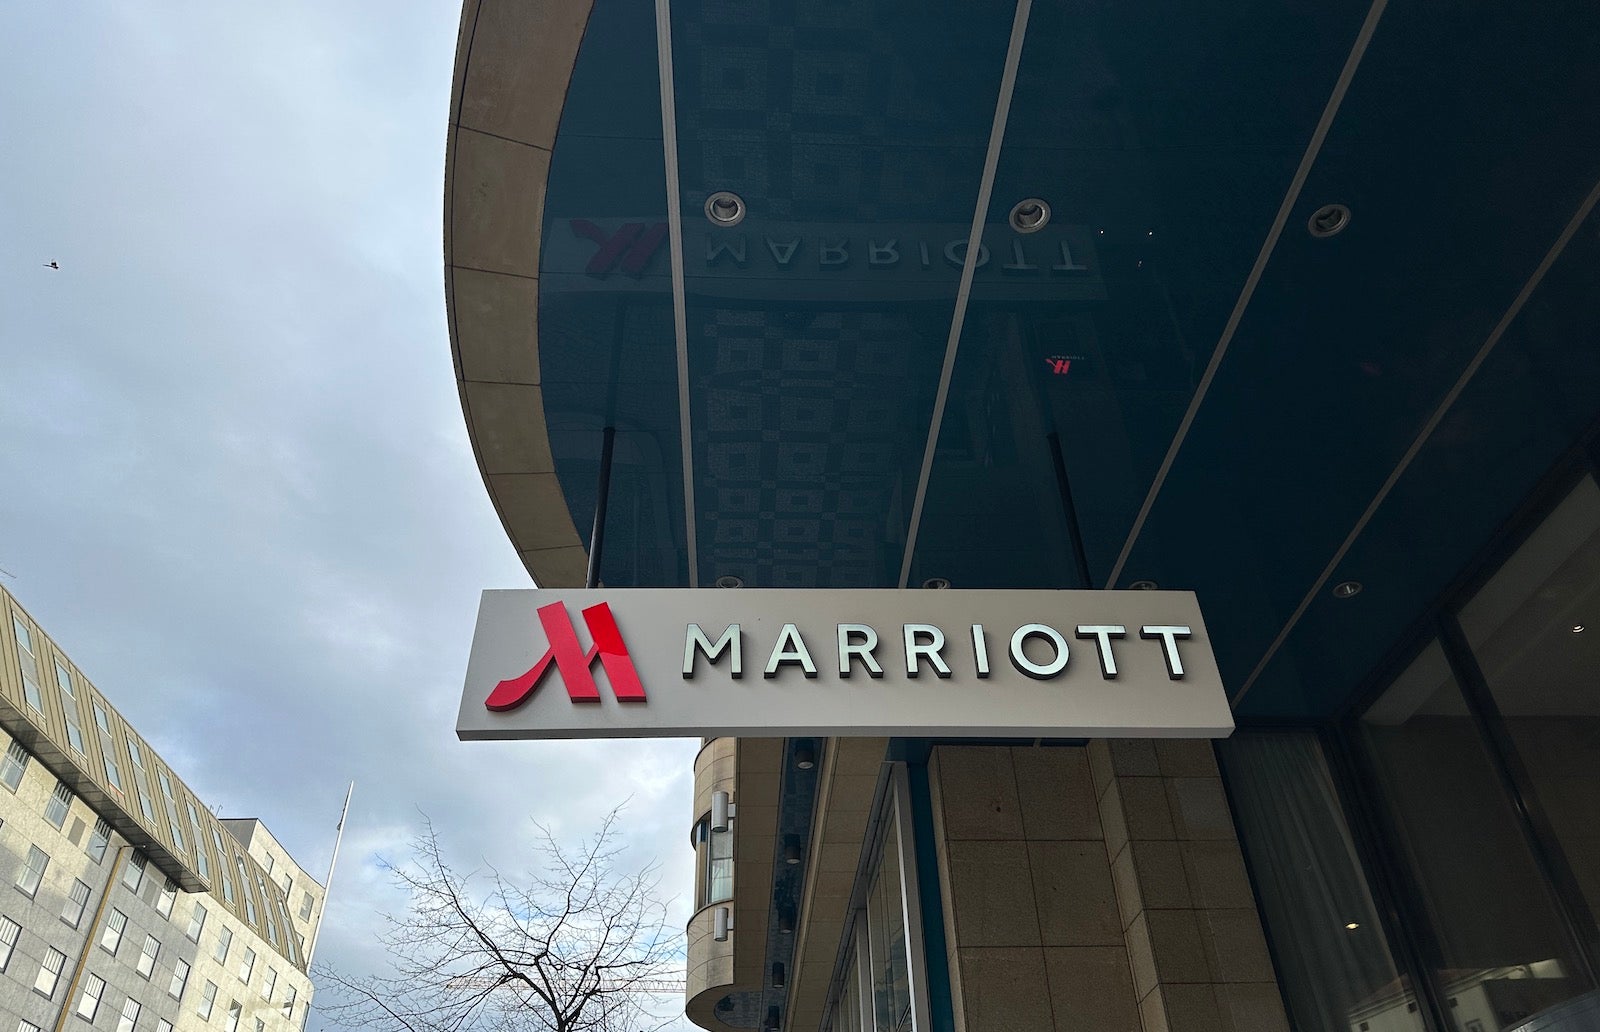 Marriott sign at the Marriott Prague